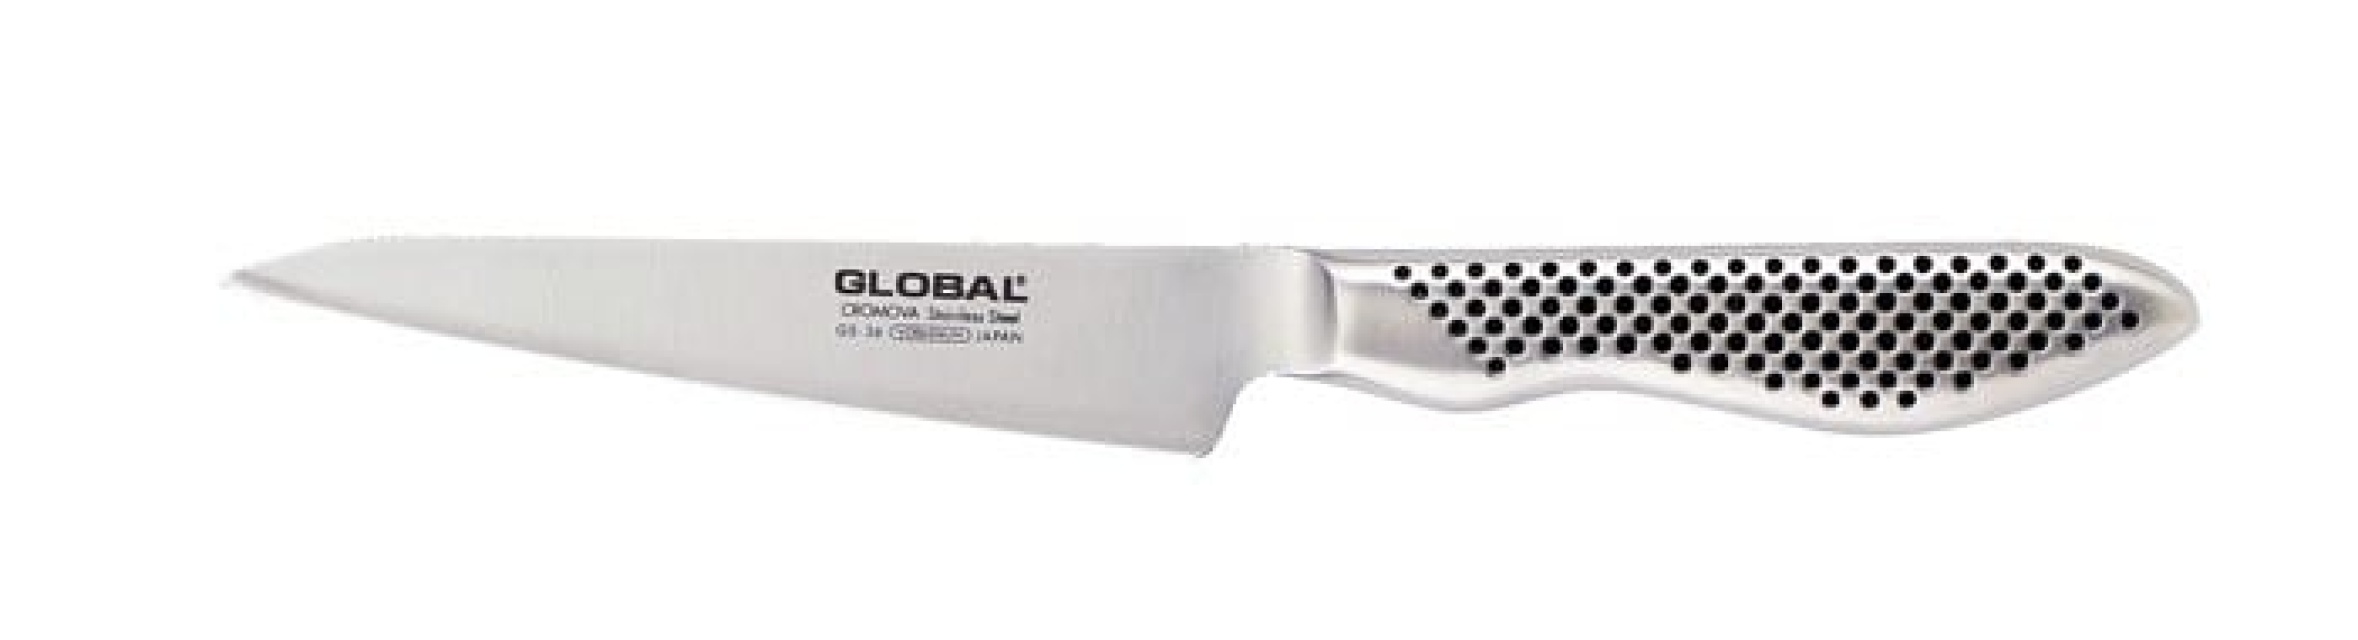 GS-36 universalkniv 11cm - Global